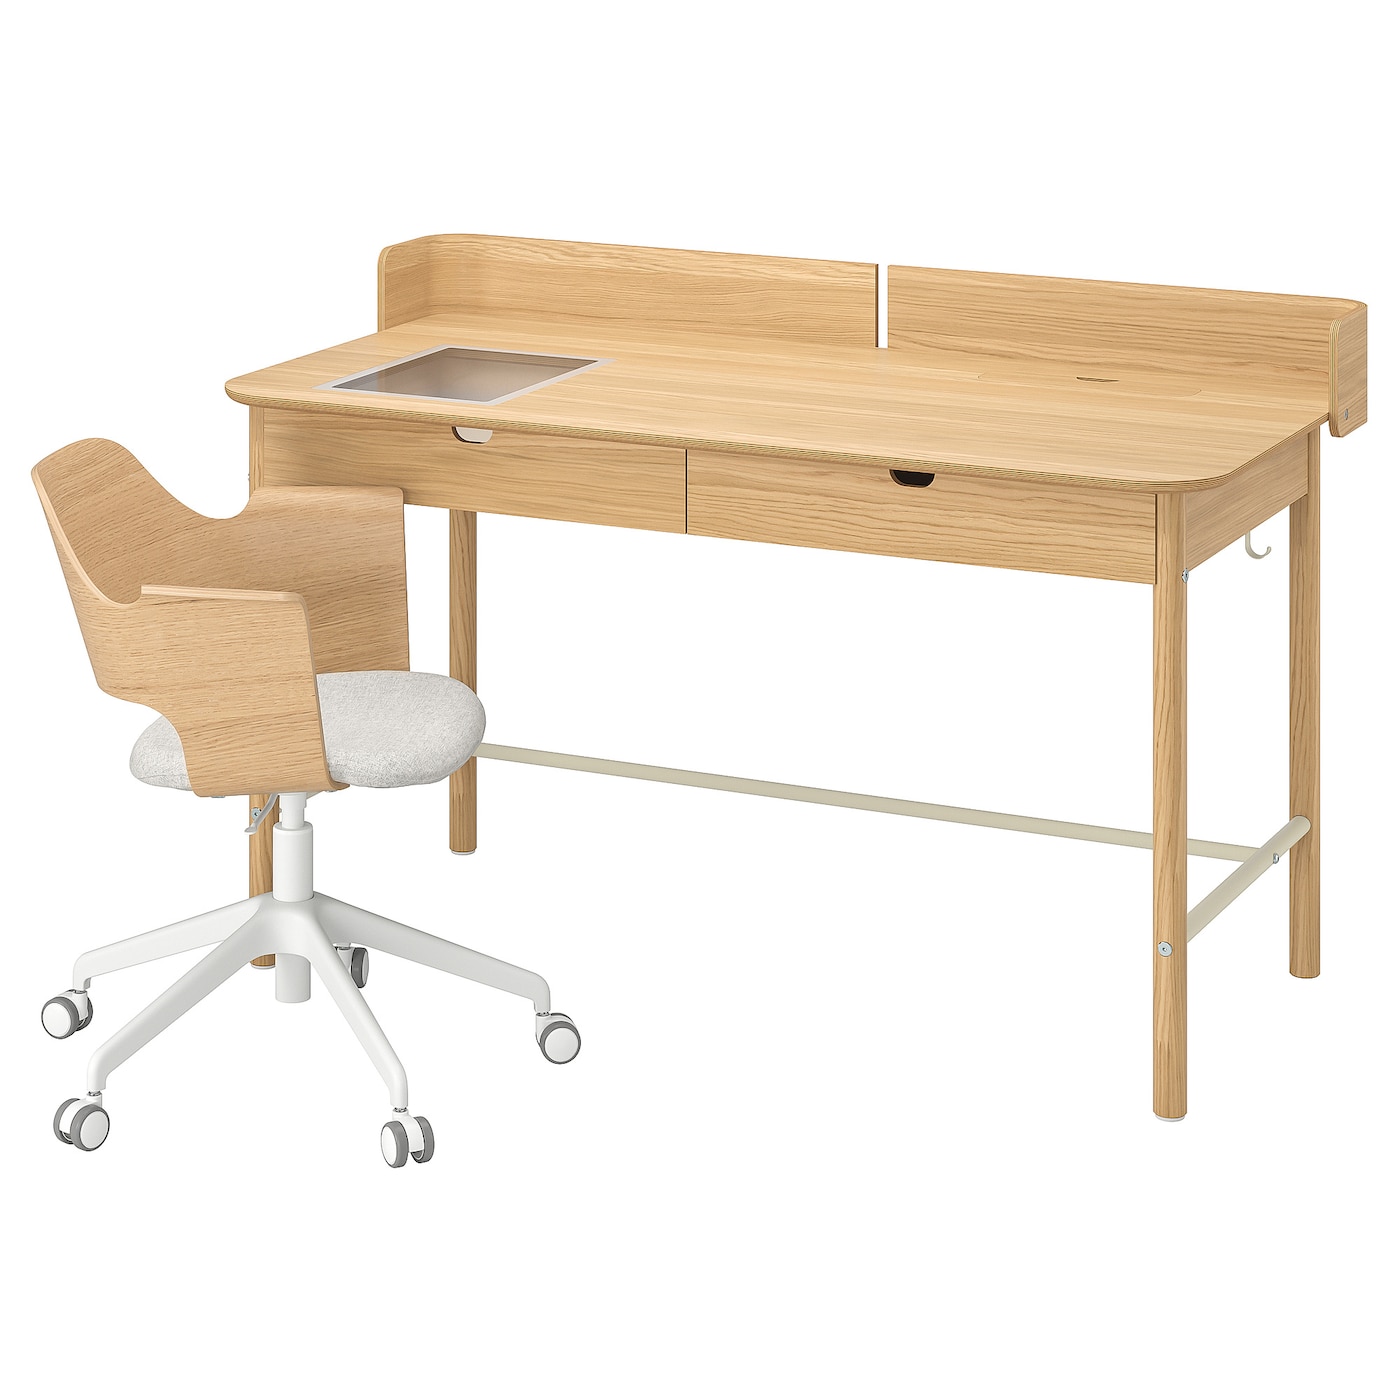 Комбинация: стол и стул - IKEA RIDSPÖ/RIDSPO/FJÄLLBERGET/FJALLBERGET, 140х70 см, дуб, РИДСПО/ФЬЕЛЛЬБЕРГЕТ ИКЕА